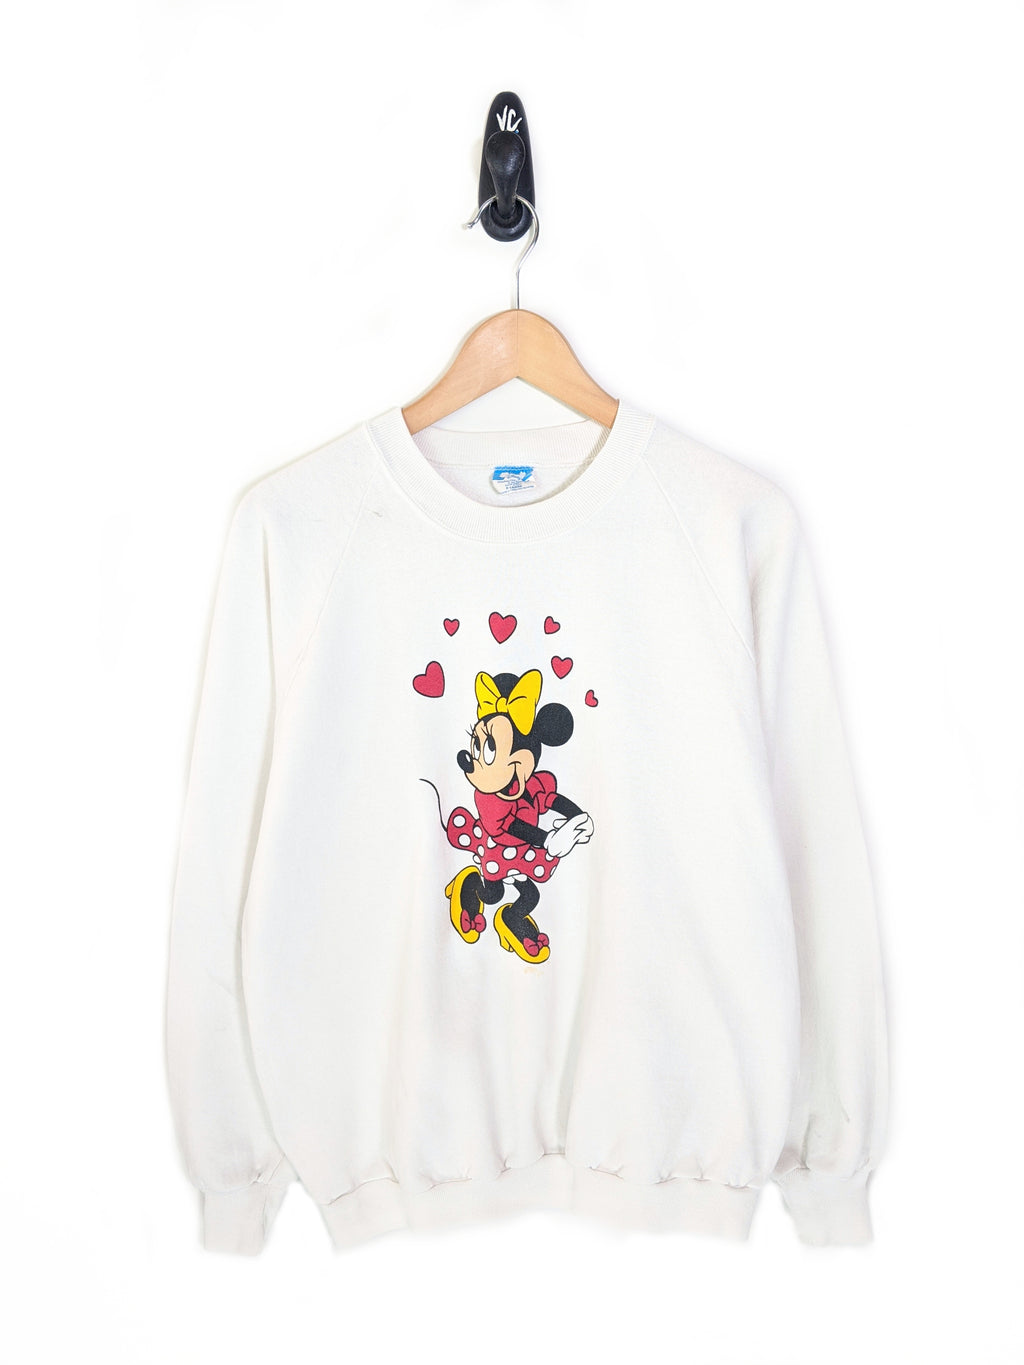 80's Minnie Mouse Sweatshirt (M)